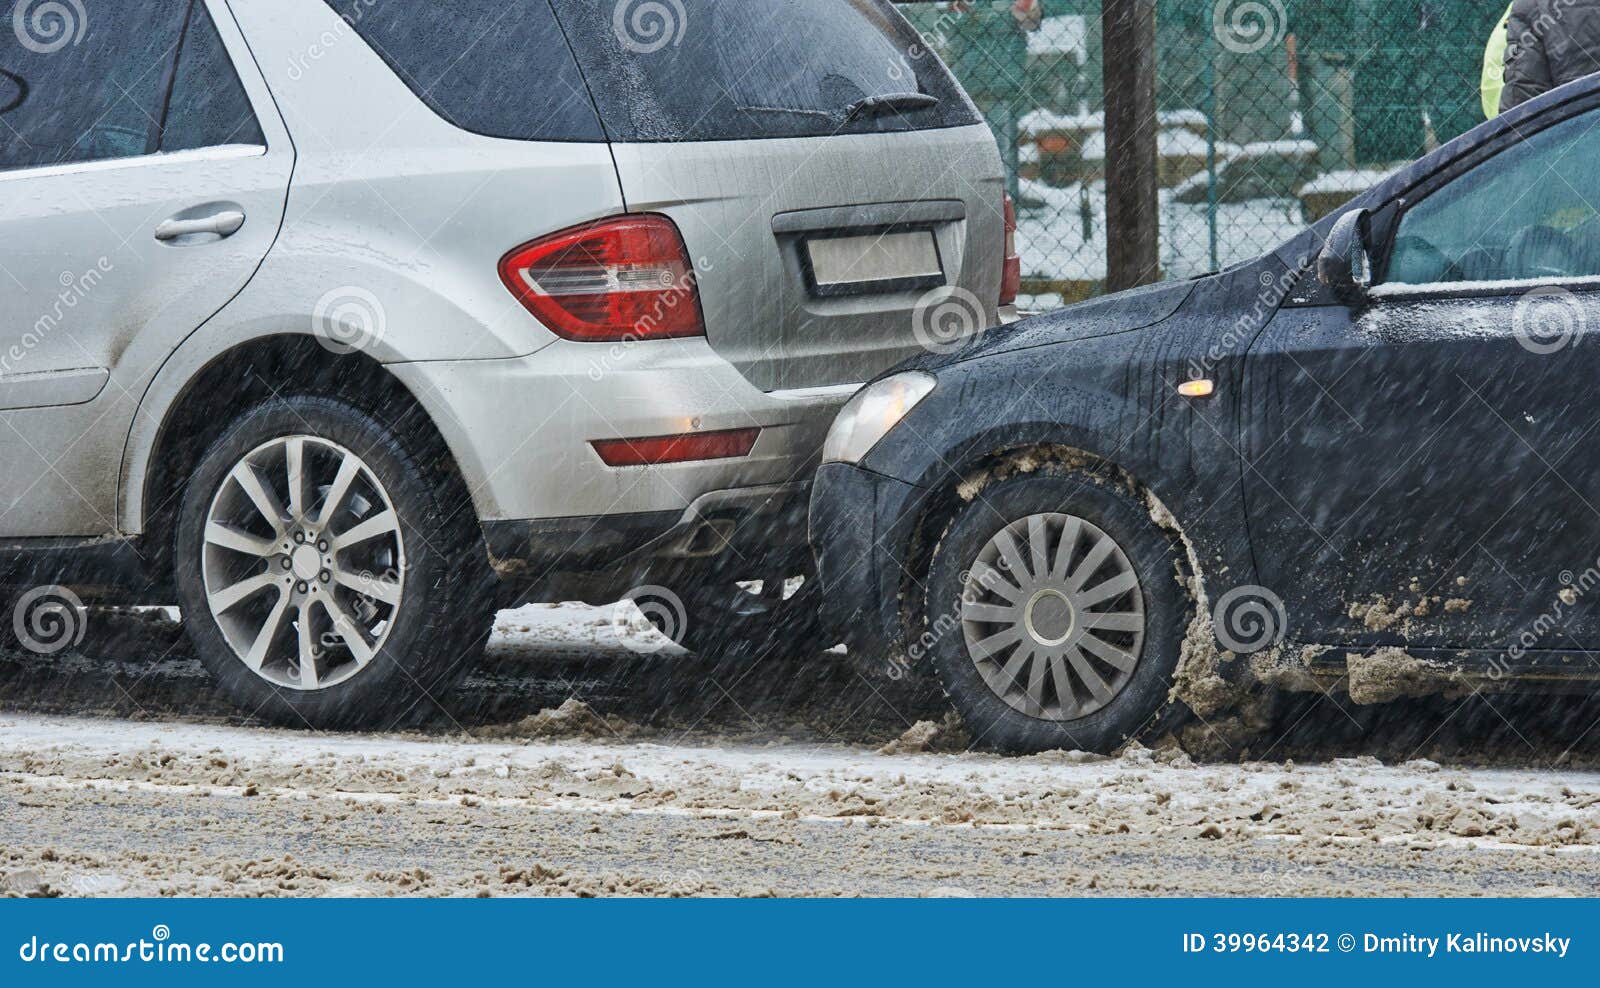 car crash collision in winter